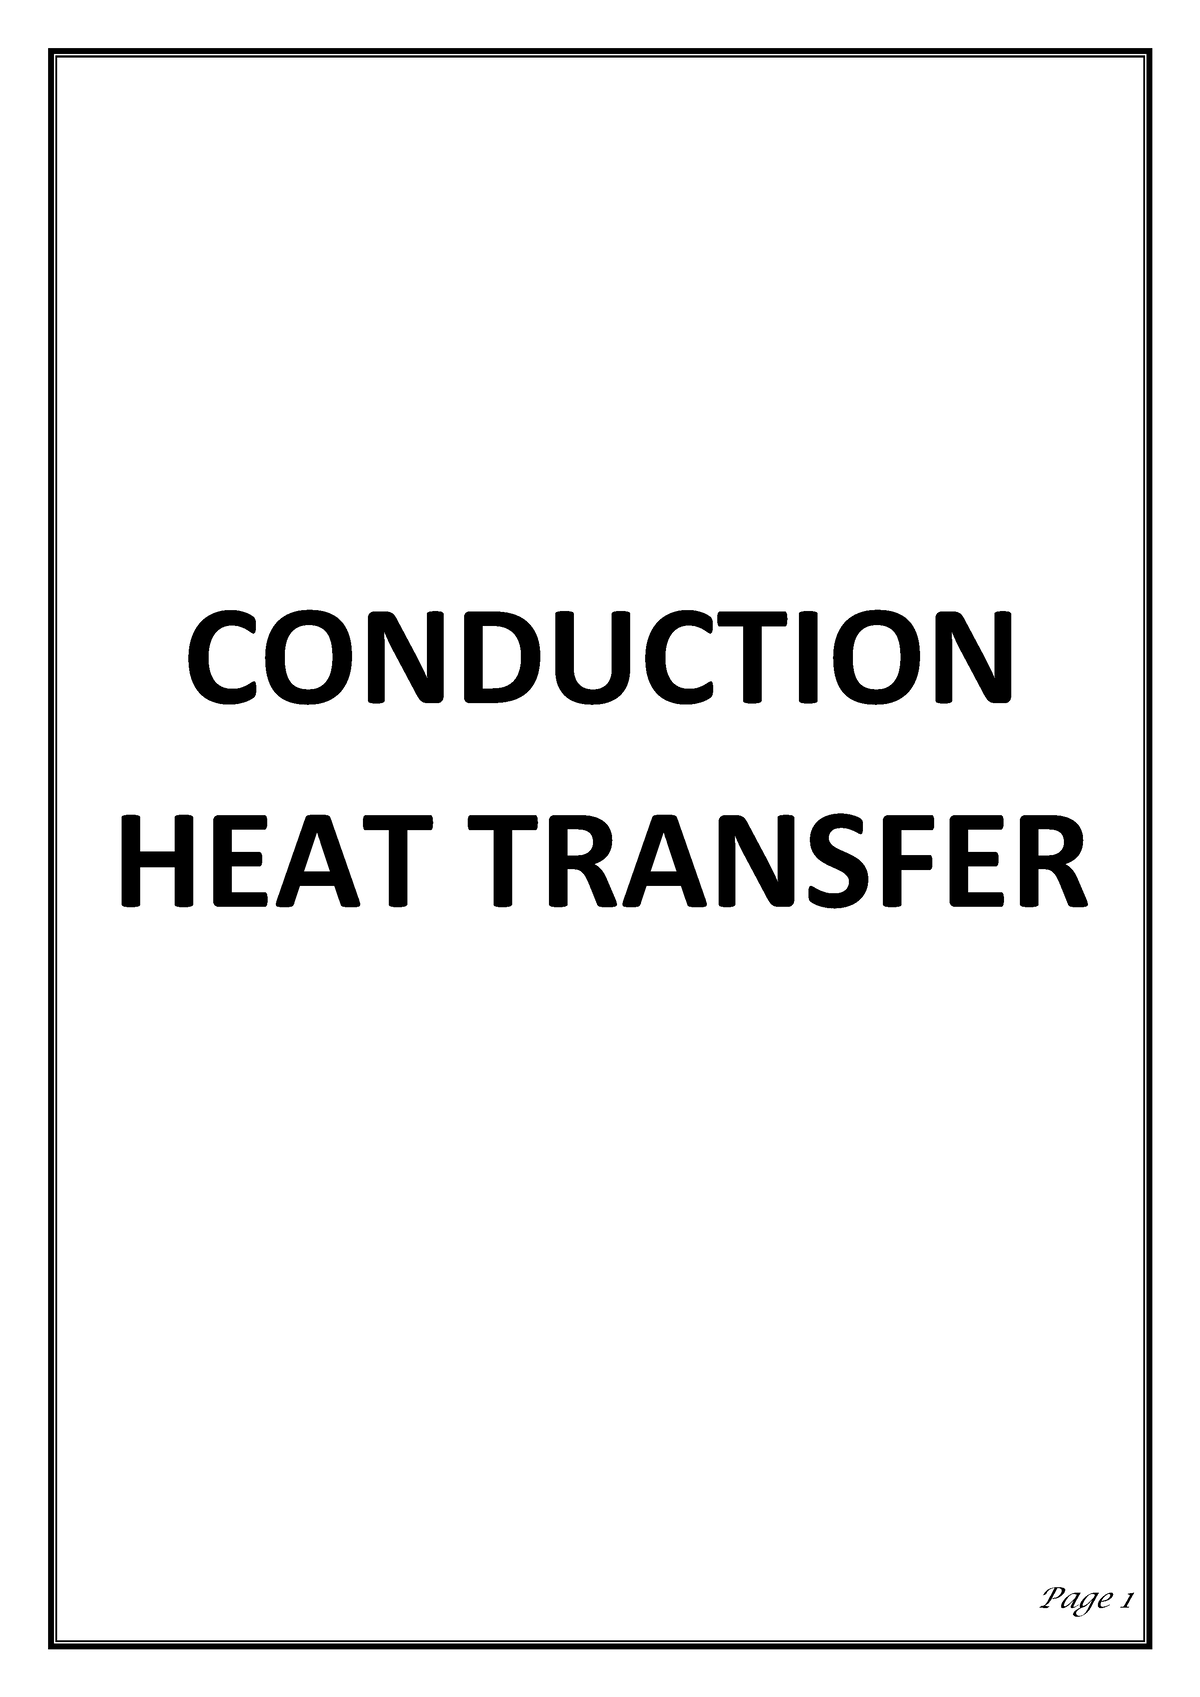 heat-transfer-sheets-conduction-heat-transfer-sheet-1-heat-transfer